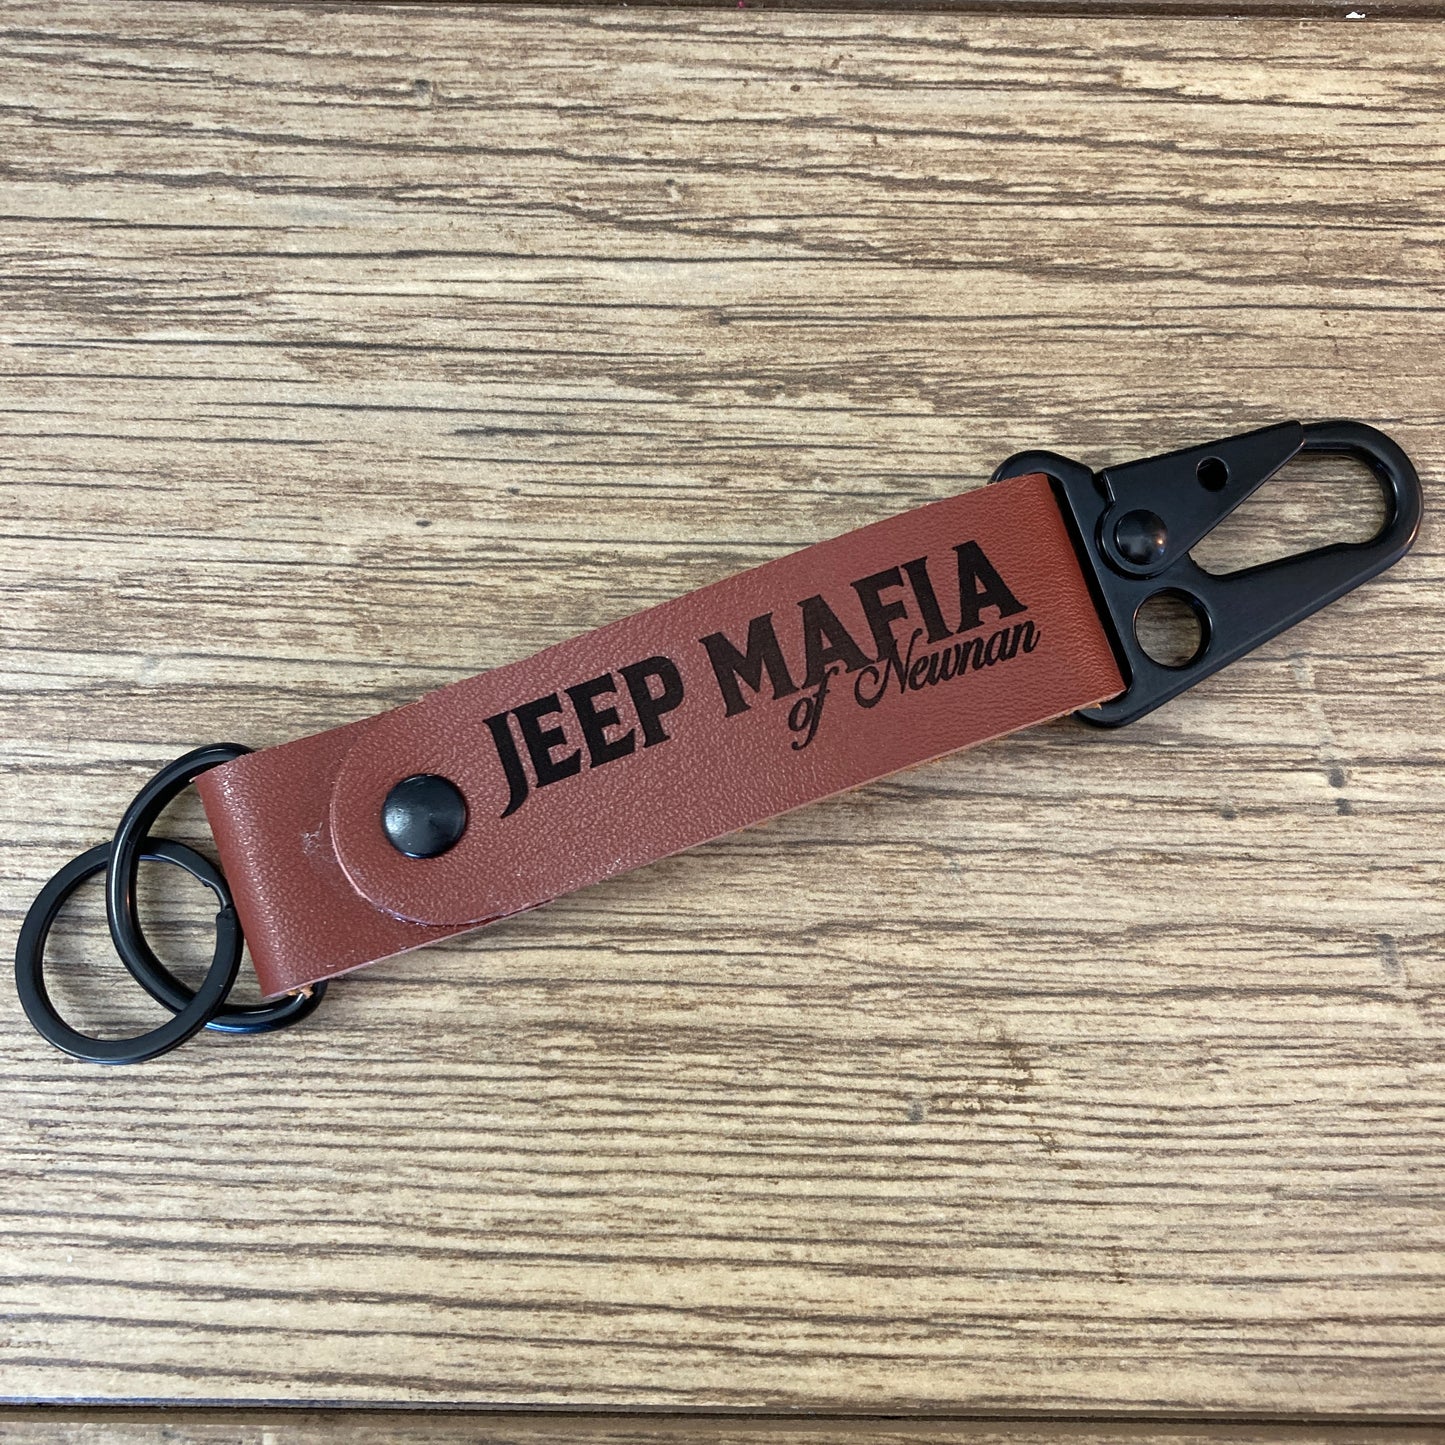 Jeep Mafia of Newnan Leather Keychain with Clip